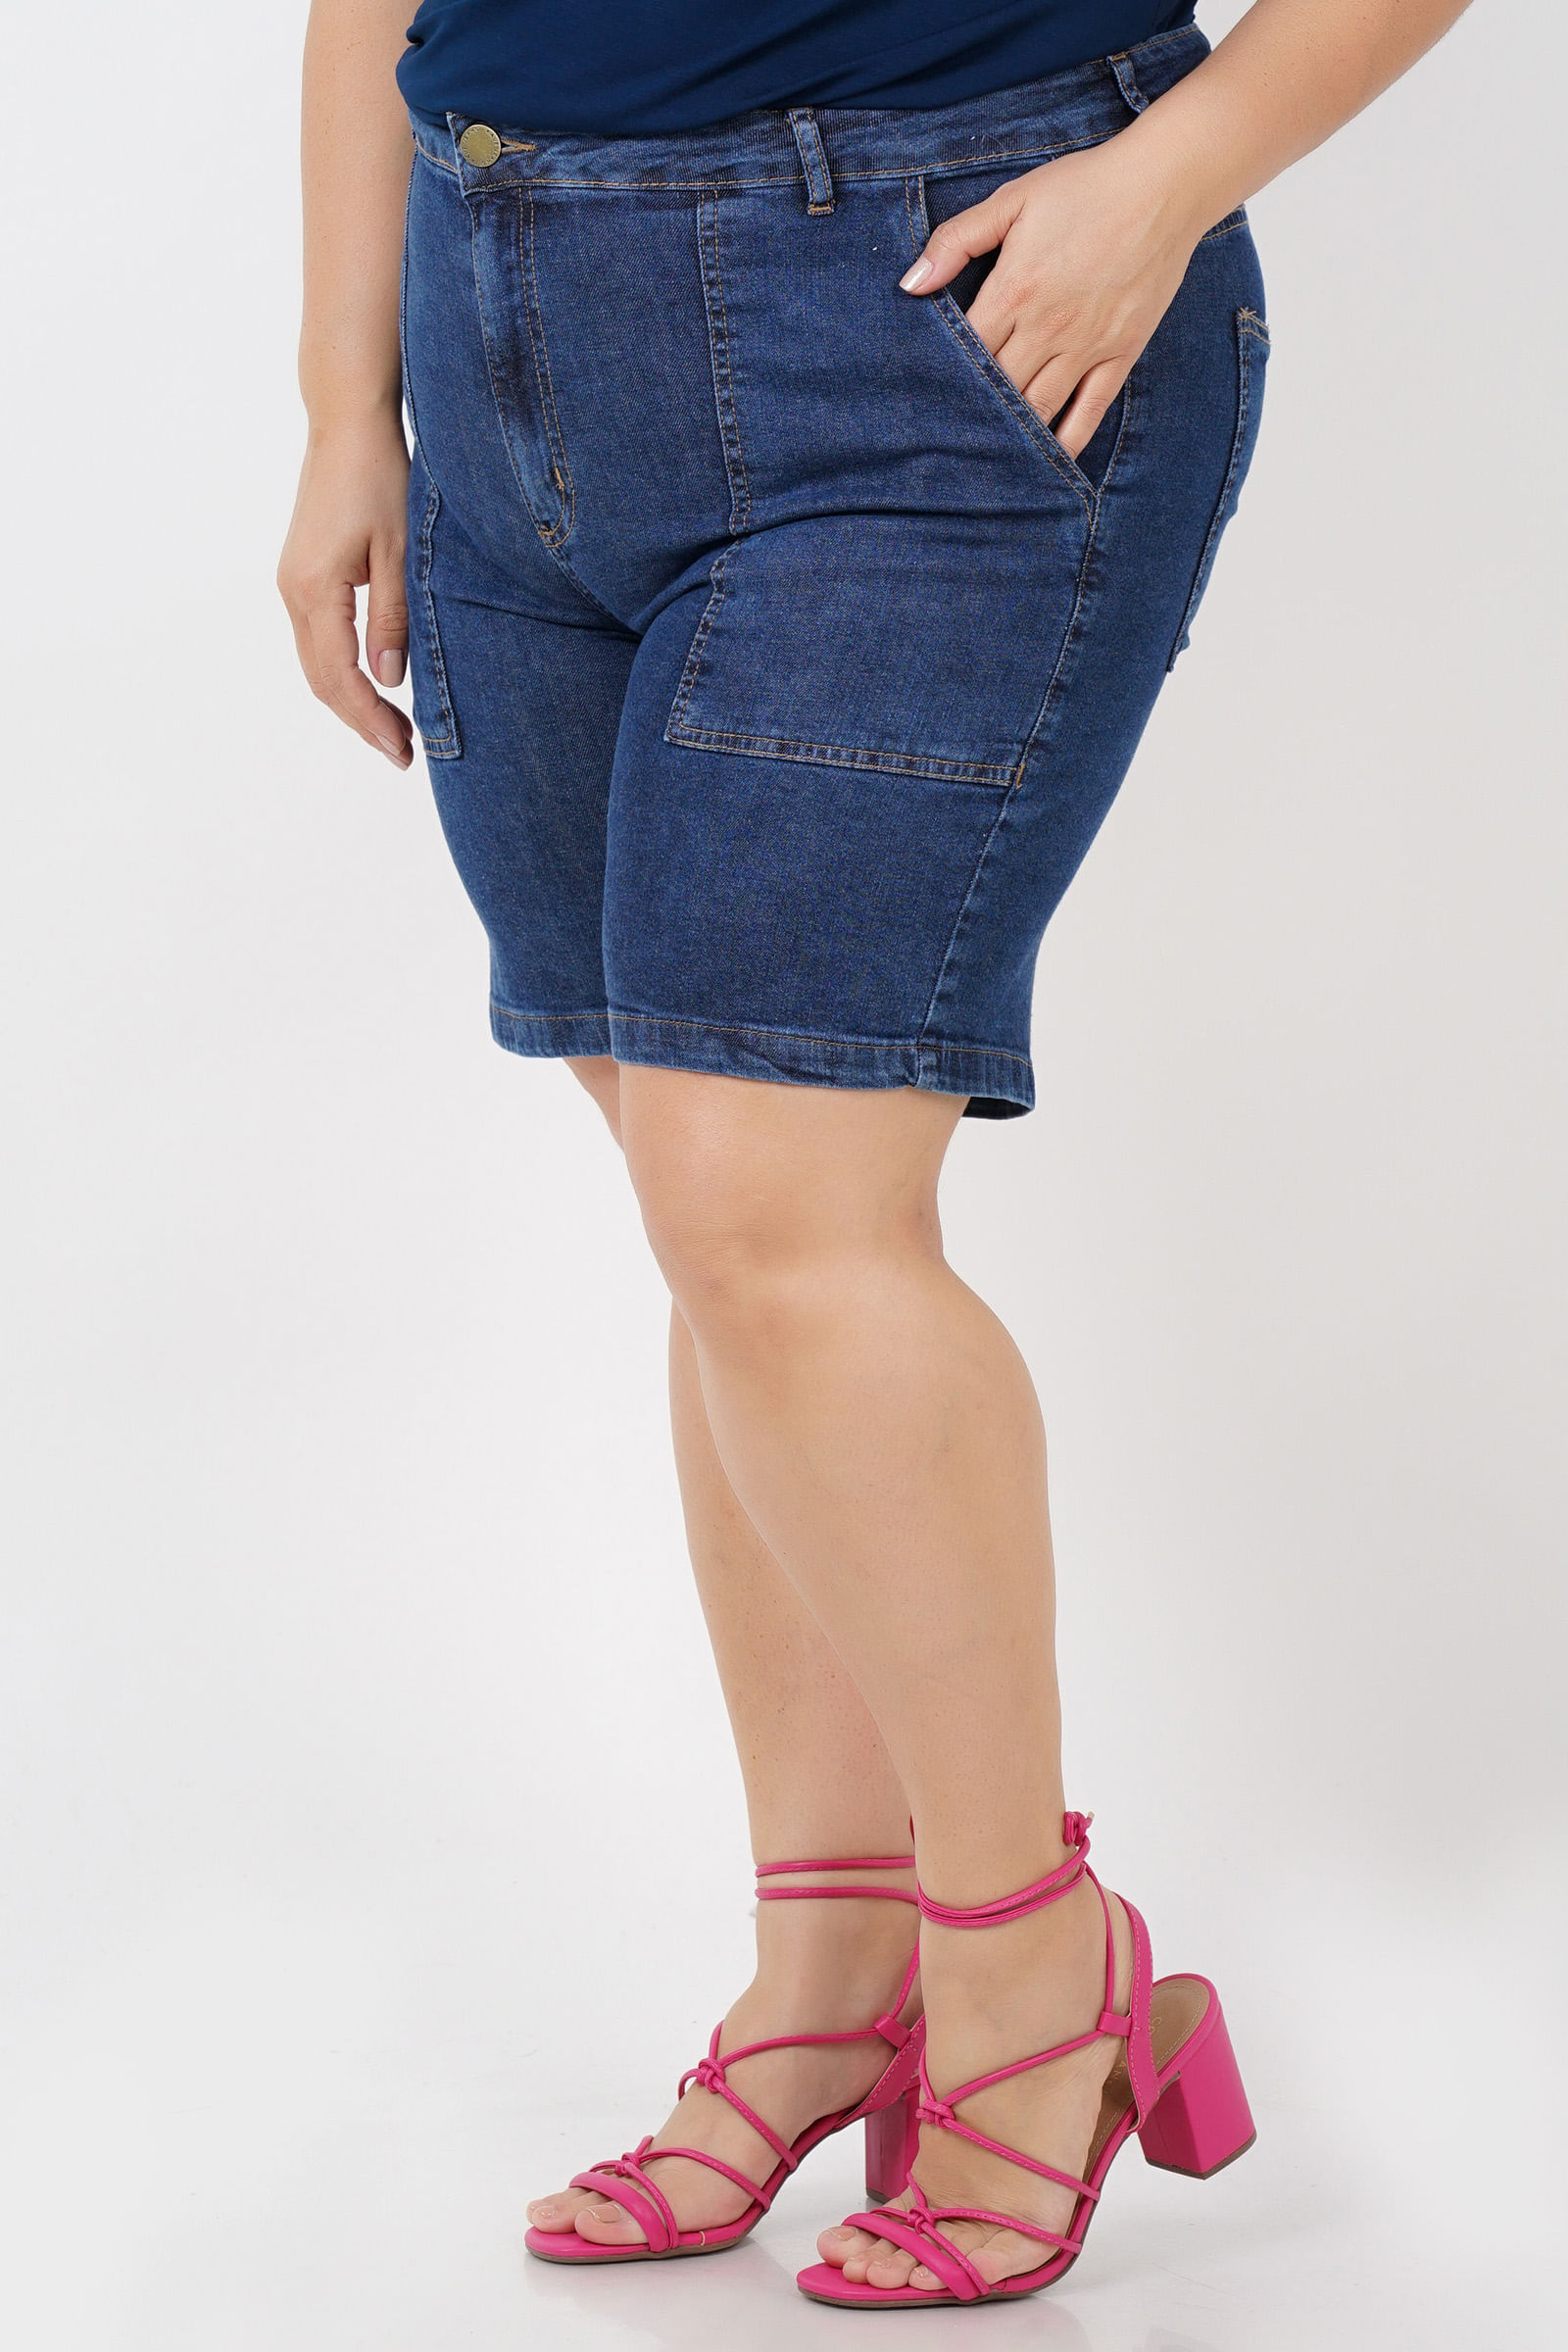 Shorts-jeans-com-bolso-chapado-plus-size